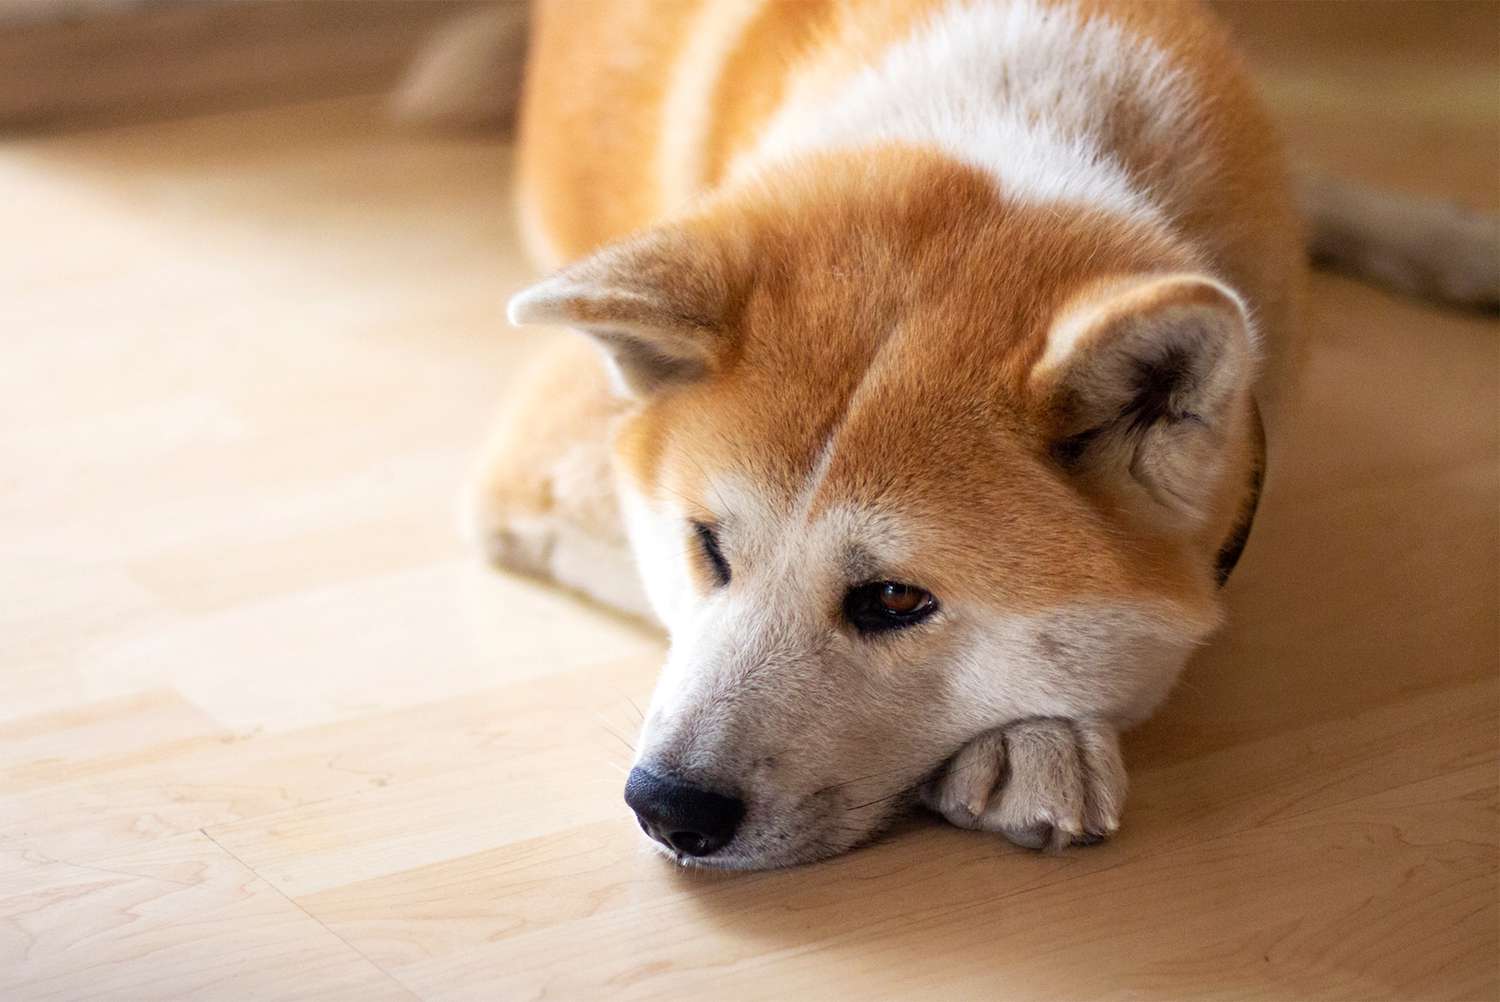 Beautiful akita inu Japanese dog laying down on wooden floor